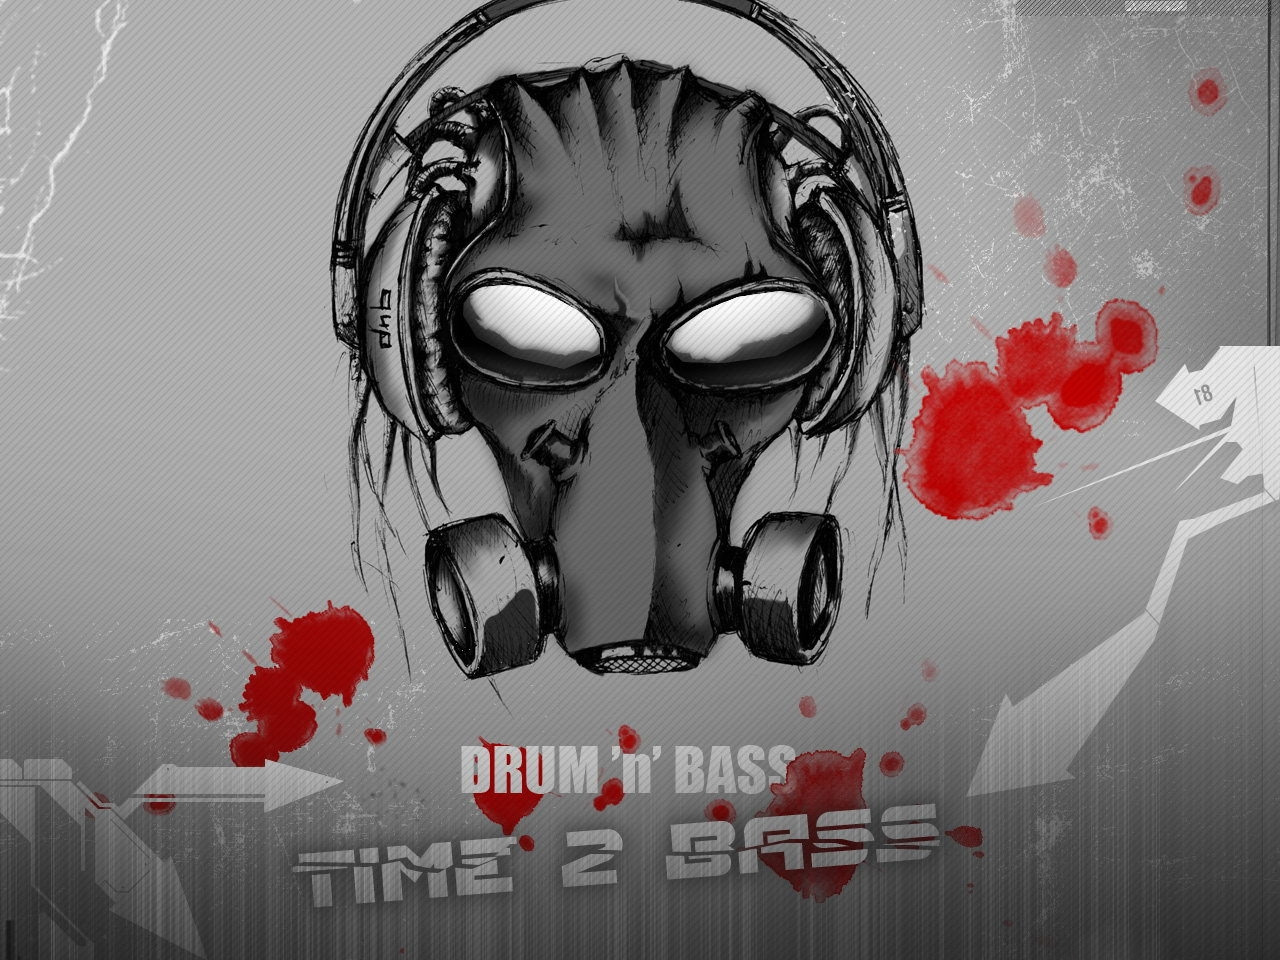 Drum and bass mix. Drum and Bass. Drum and Bass арт. Драм басс. Drum and Bass картинки.